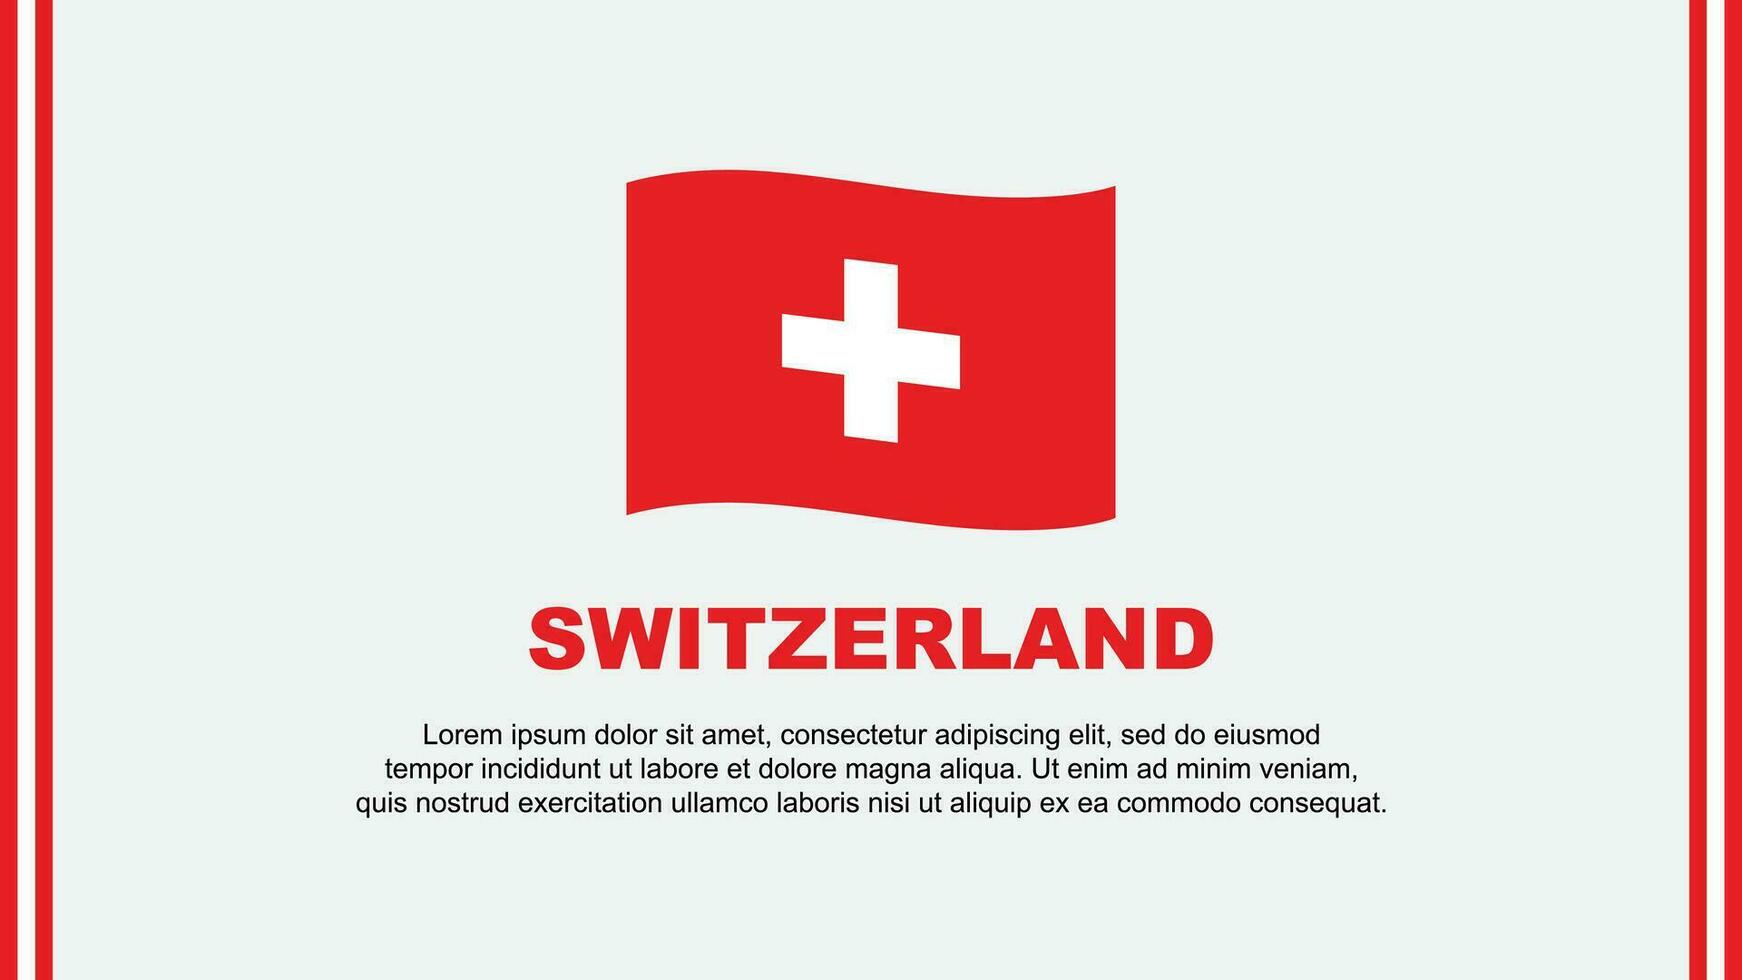 Switzerland Flag Abstract Background Design Template. Switzerland Independence Day Banner Social Media Vector Illustration. Switzerland Cartoon